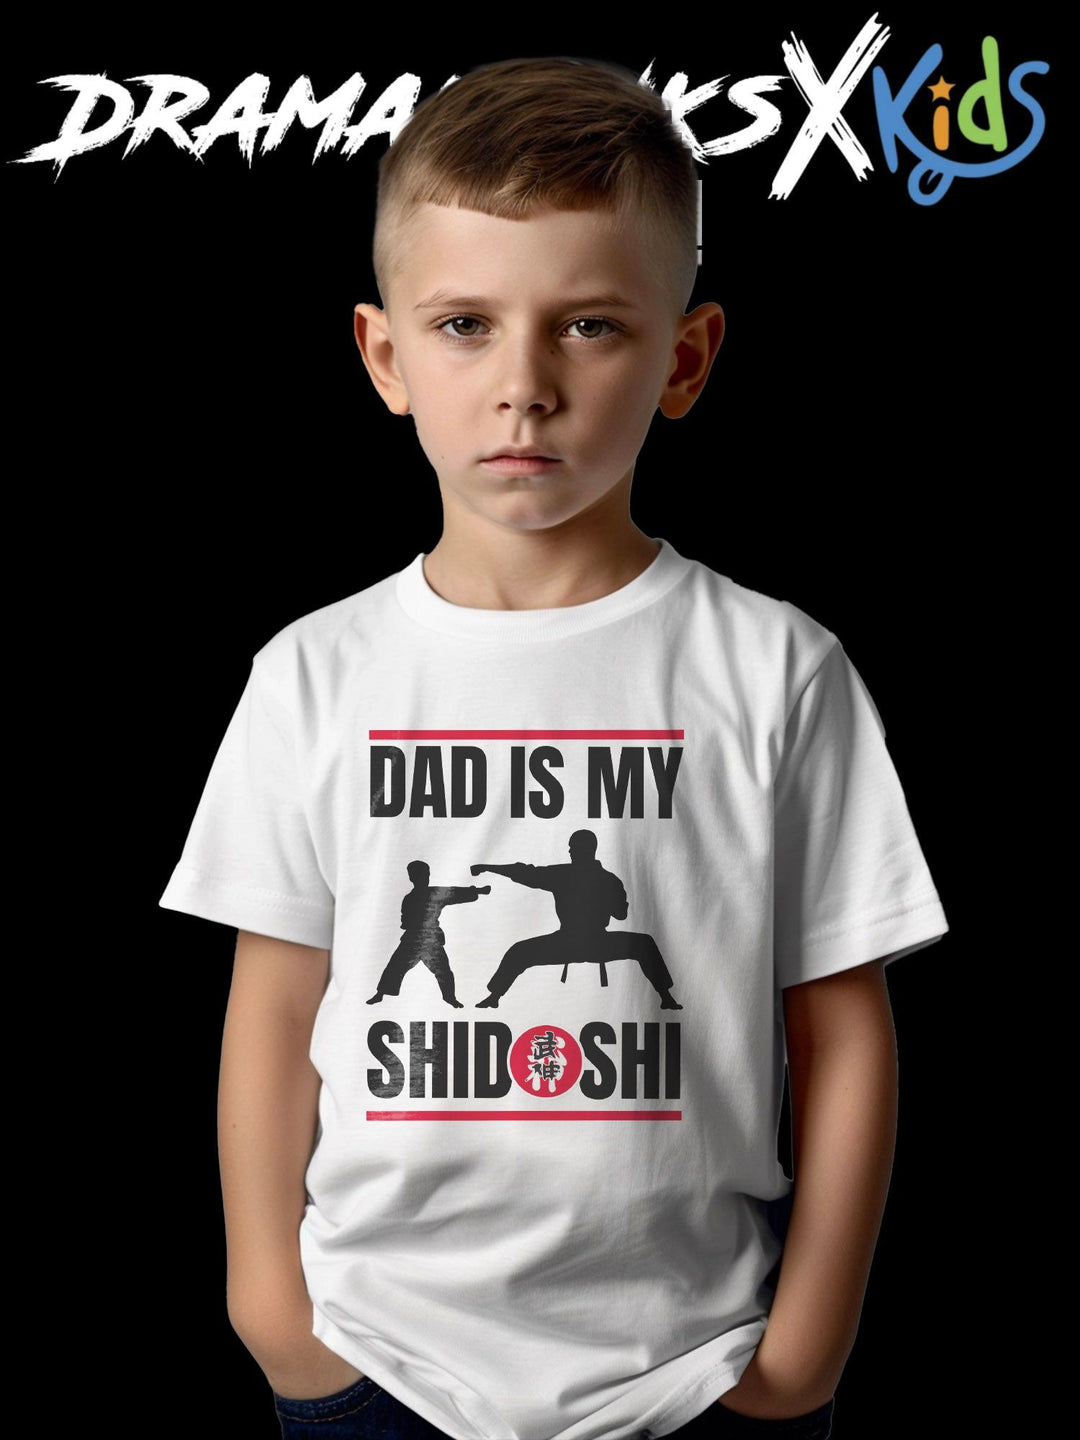 T-SHIRT FÜR KINDER "DAD IS MY SHIDOSHI" - DRAMAMONKS